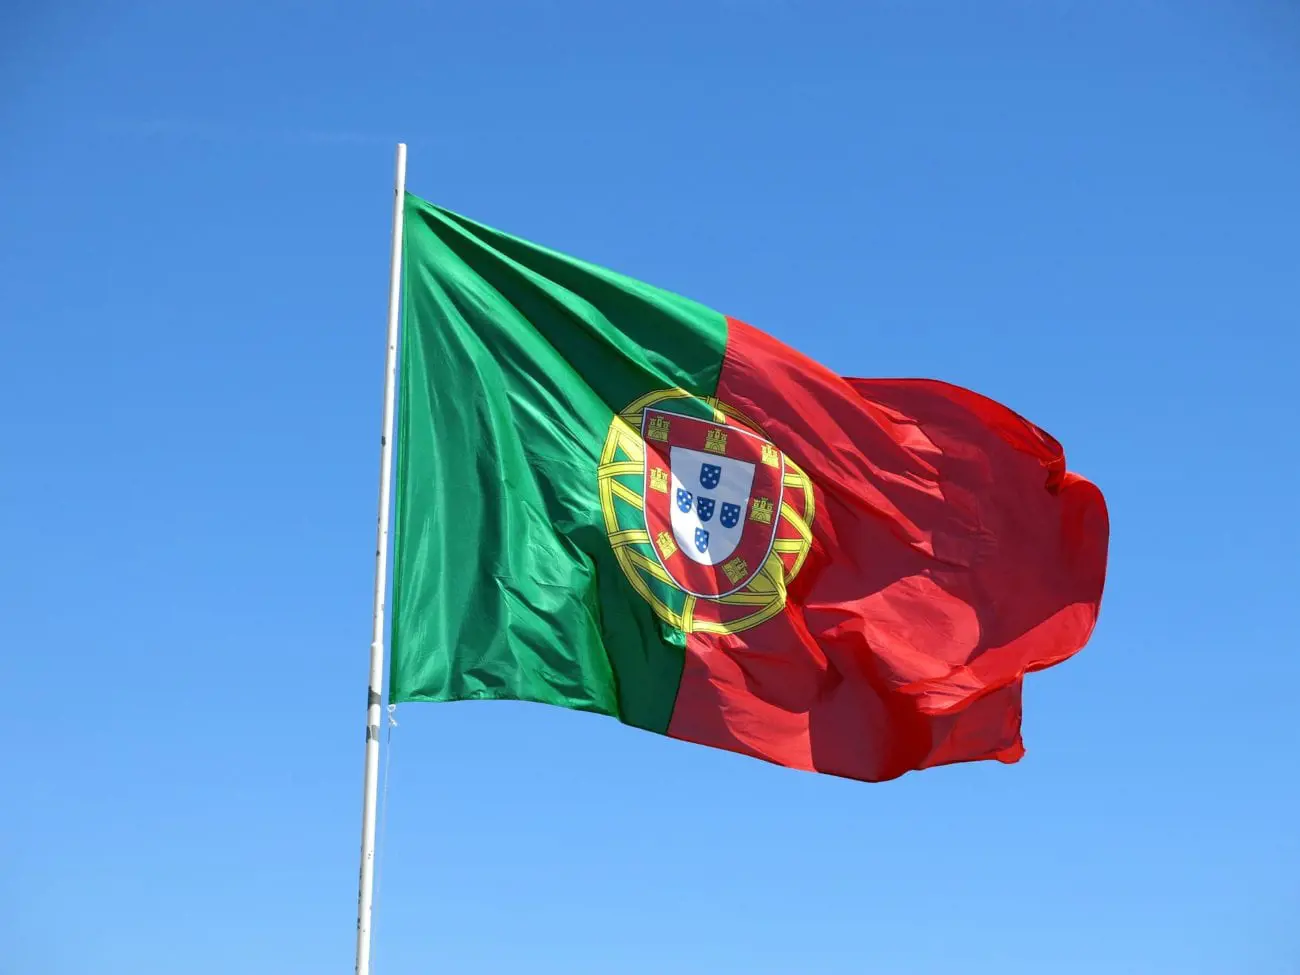 sky-wind-flag-blue-cool-image-portugal-1410847-pxhere.com4_